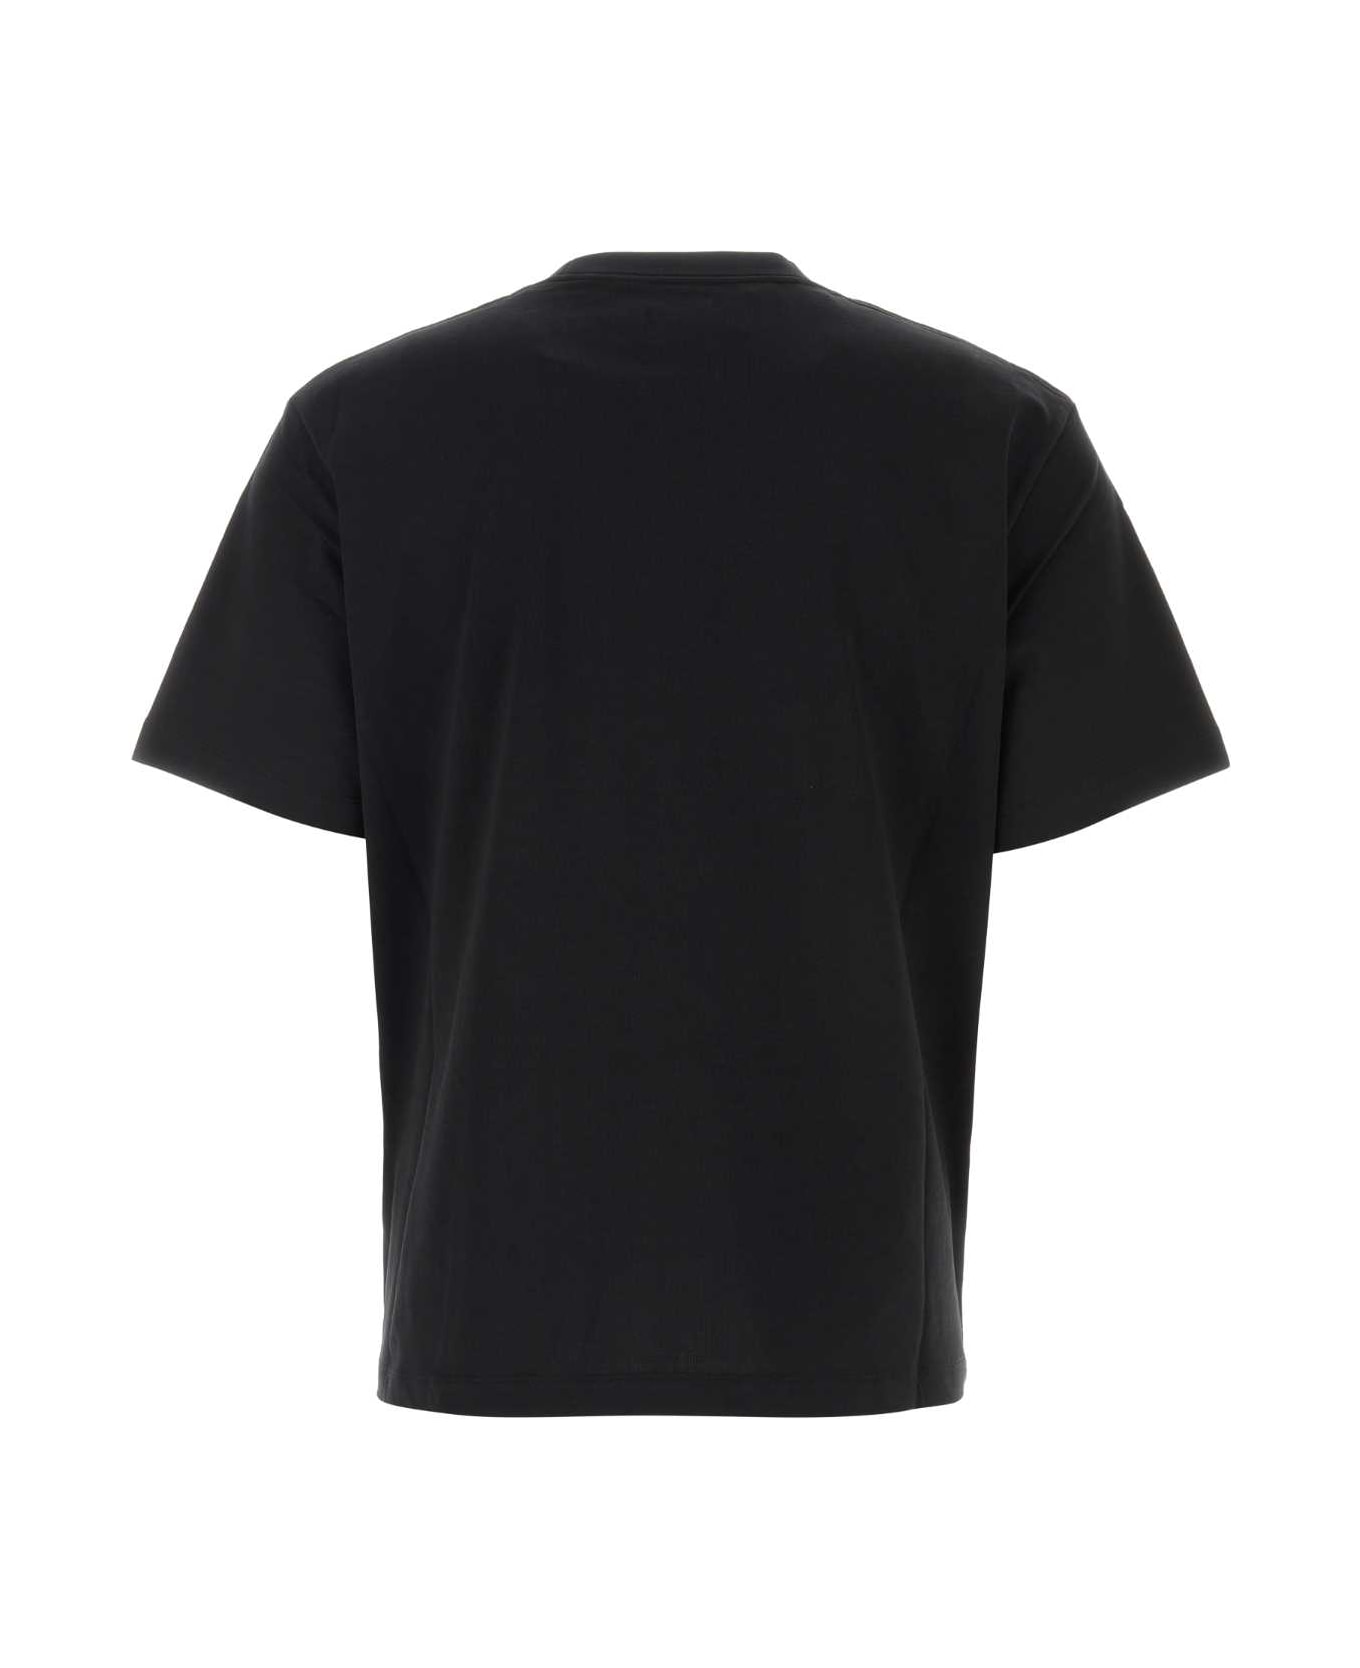 ROA Black Cotton T-shirt - BLK0001